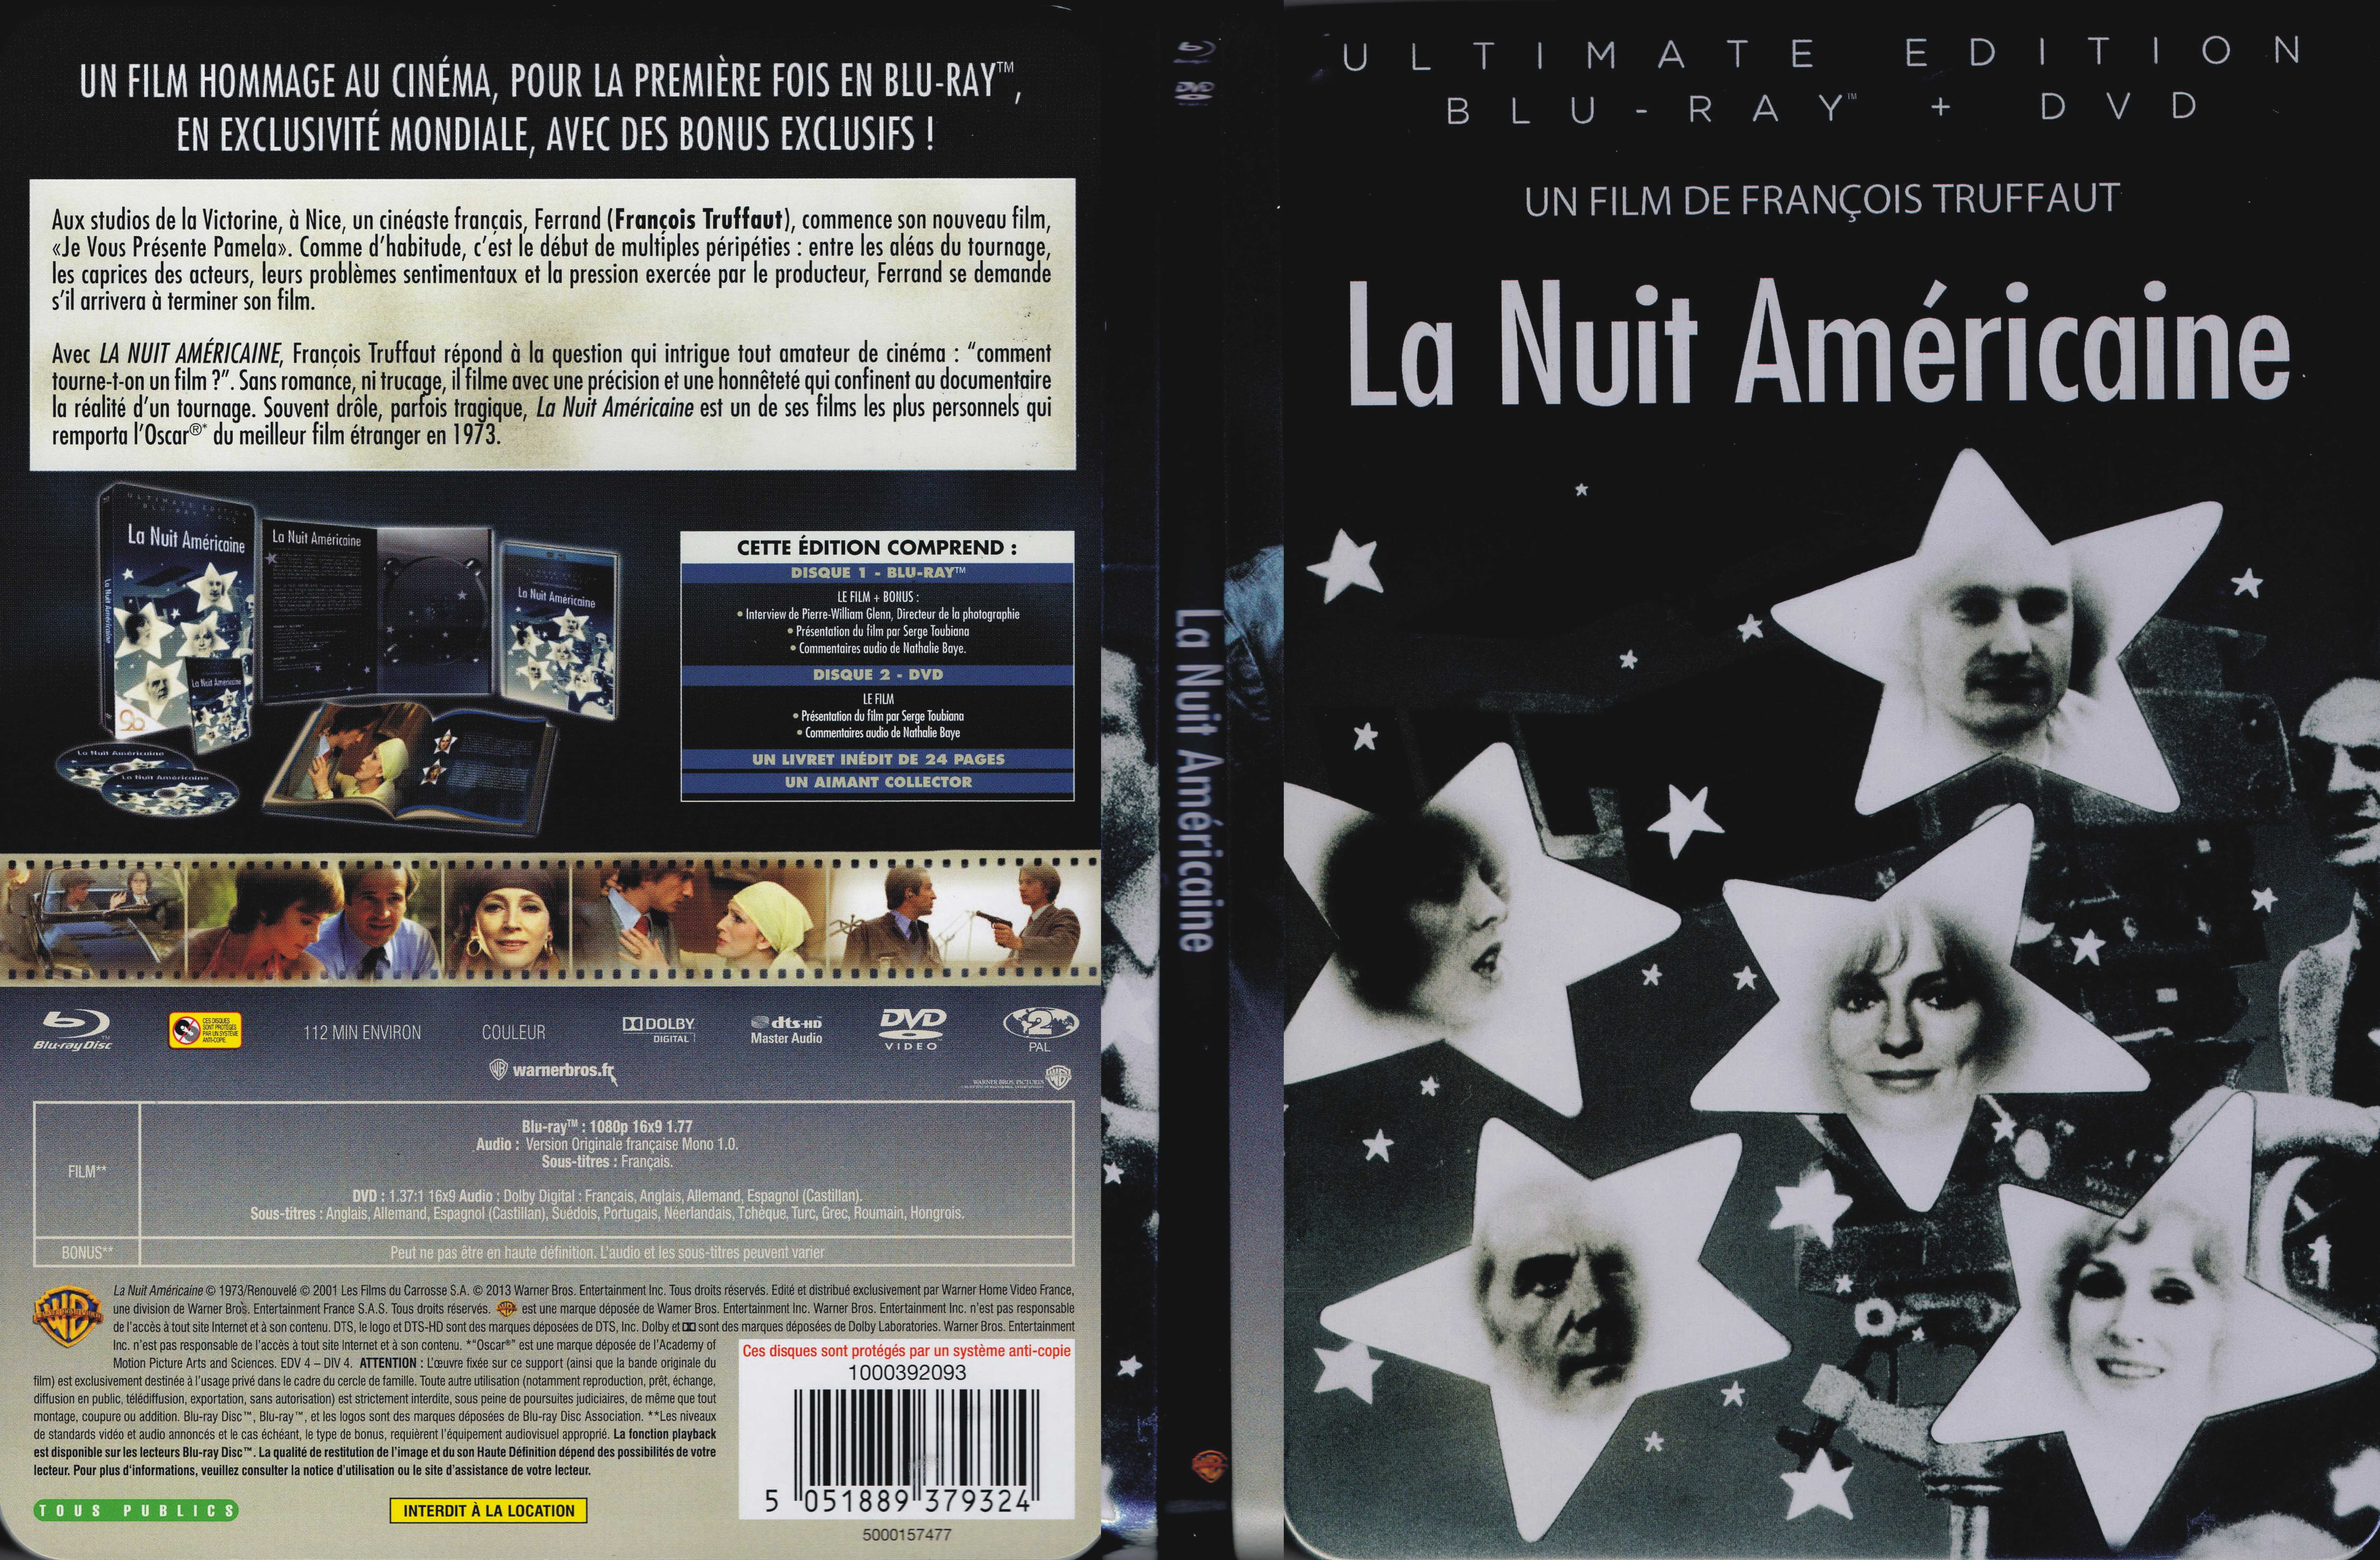 Jaquette DVD La nuit amricaine (BLU-RAY)